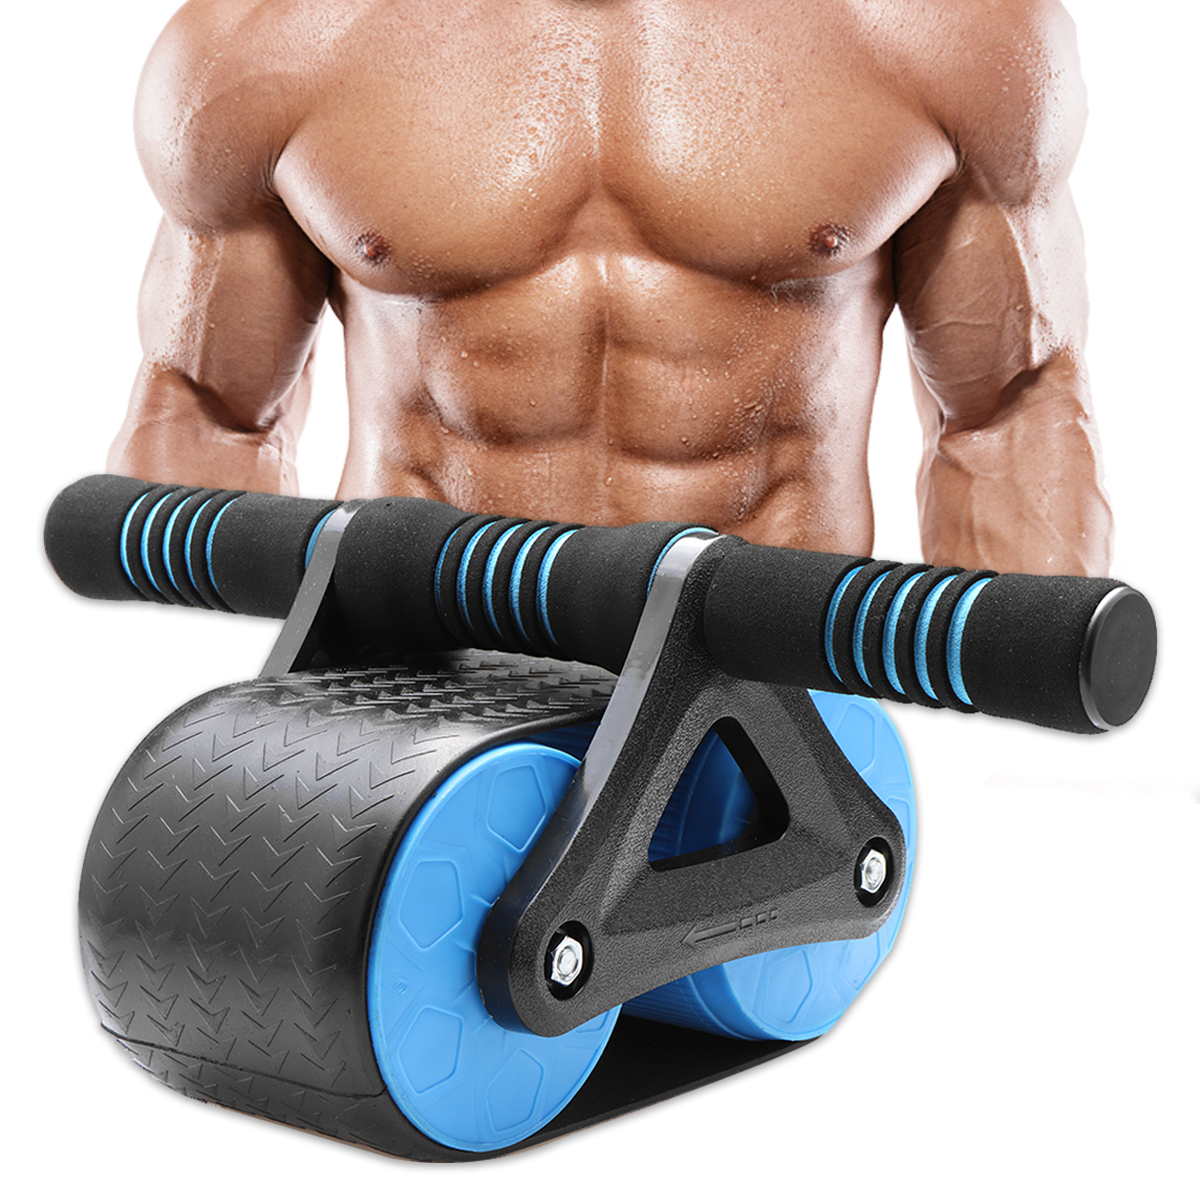 

Double Wheeled Back Fitness Training Gym Abdominal Exerciser Power Roller